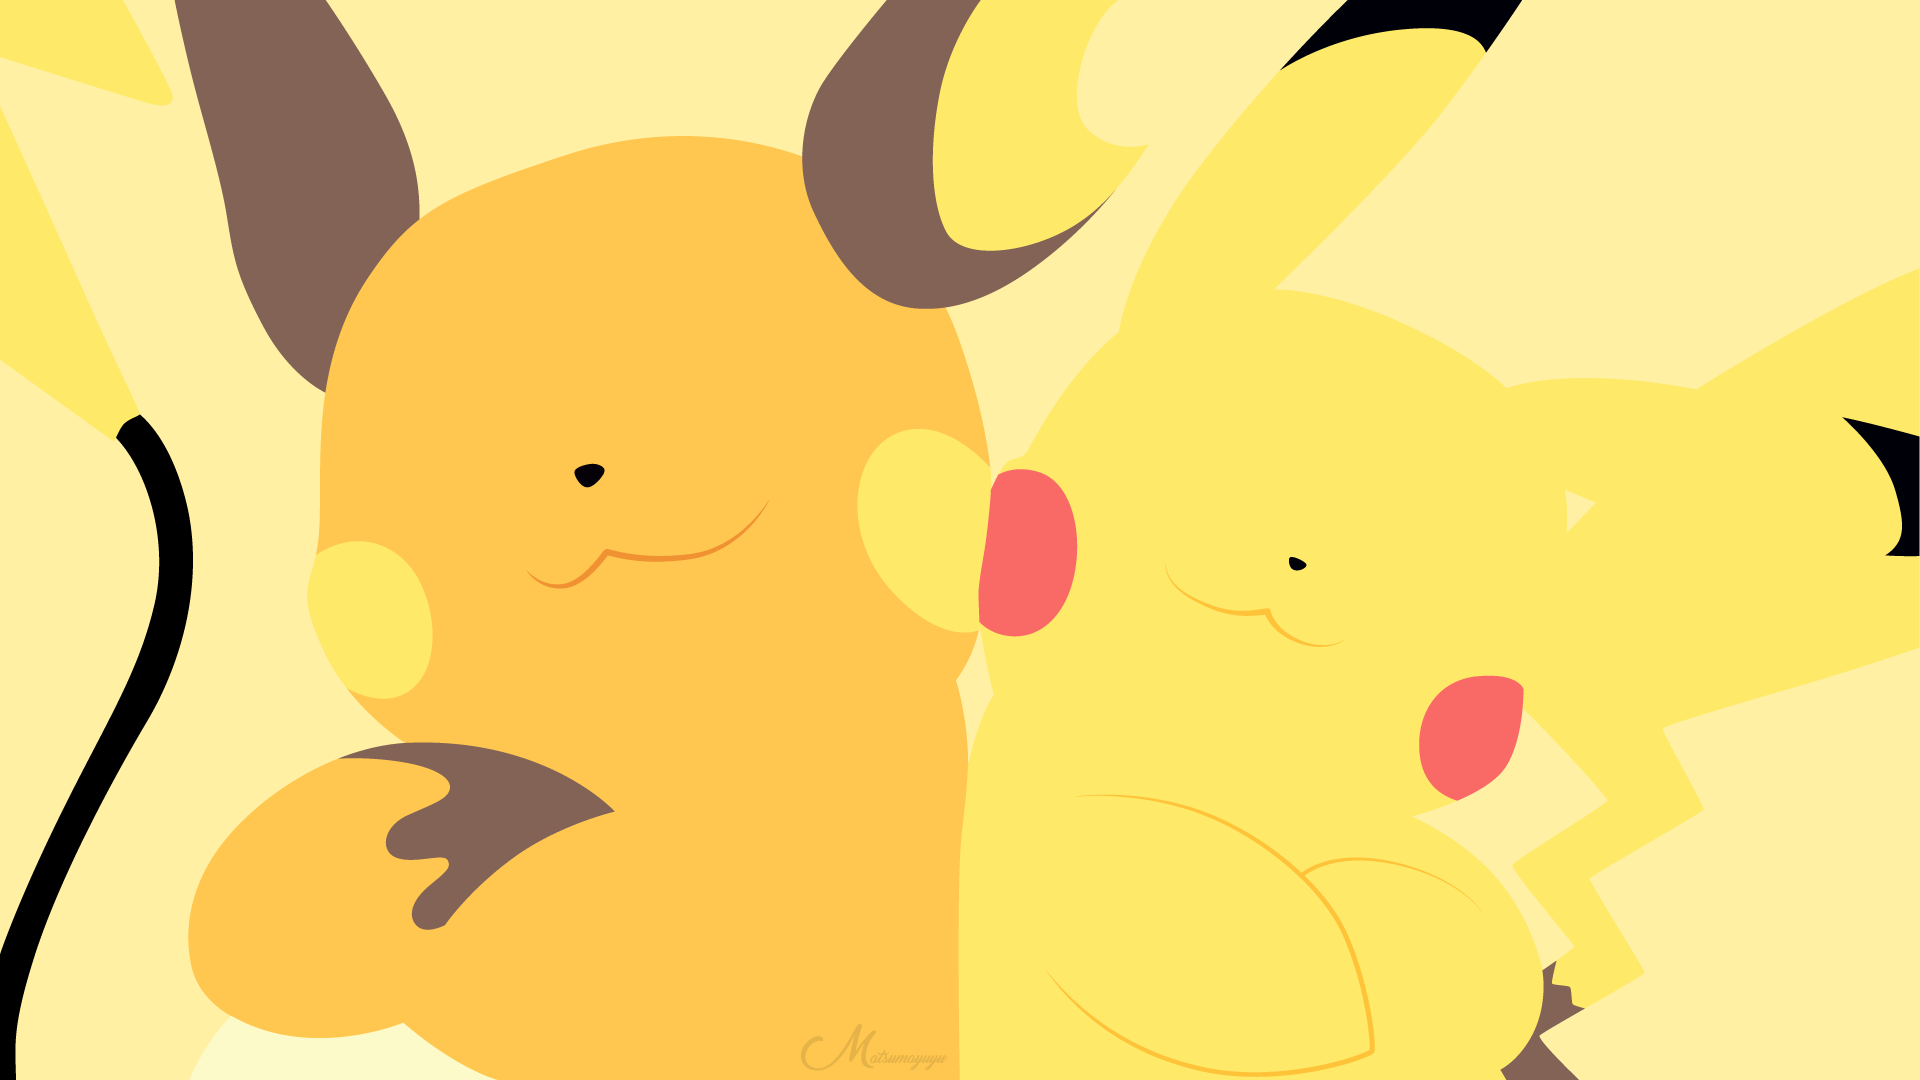 Minimal Pikachu Raichu Pokémon GO Themes